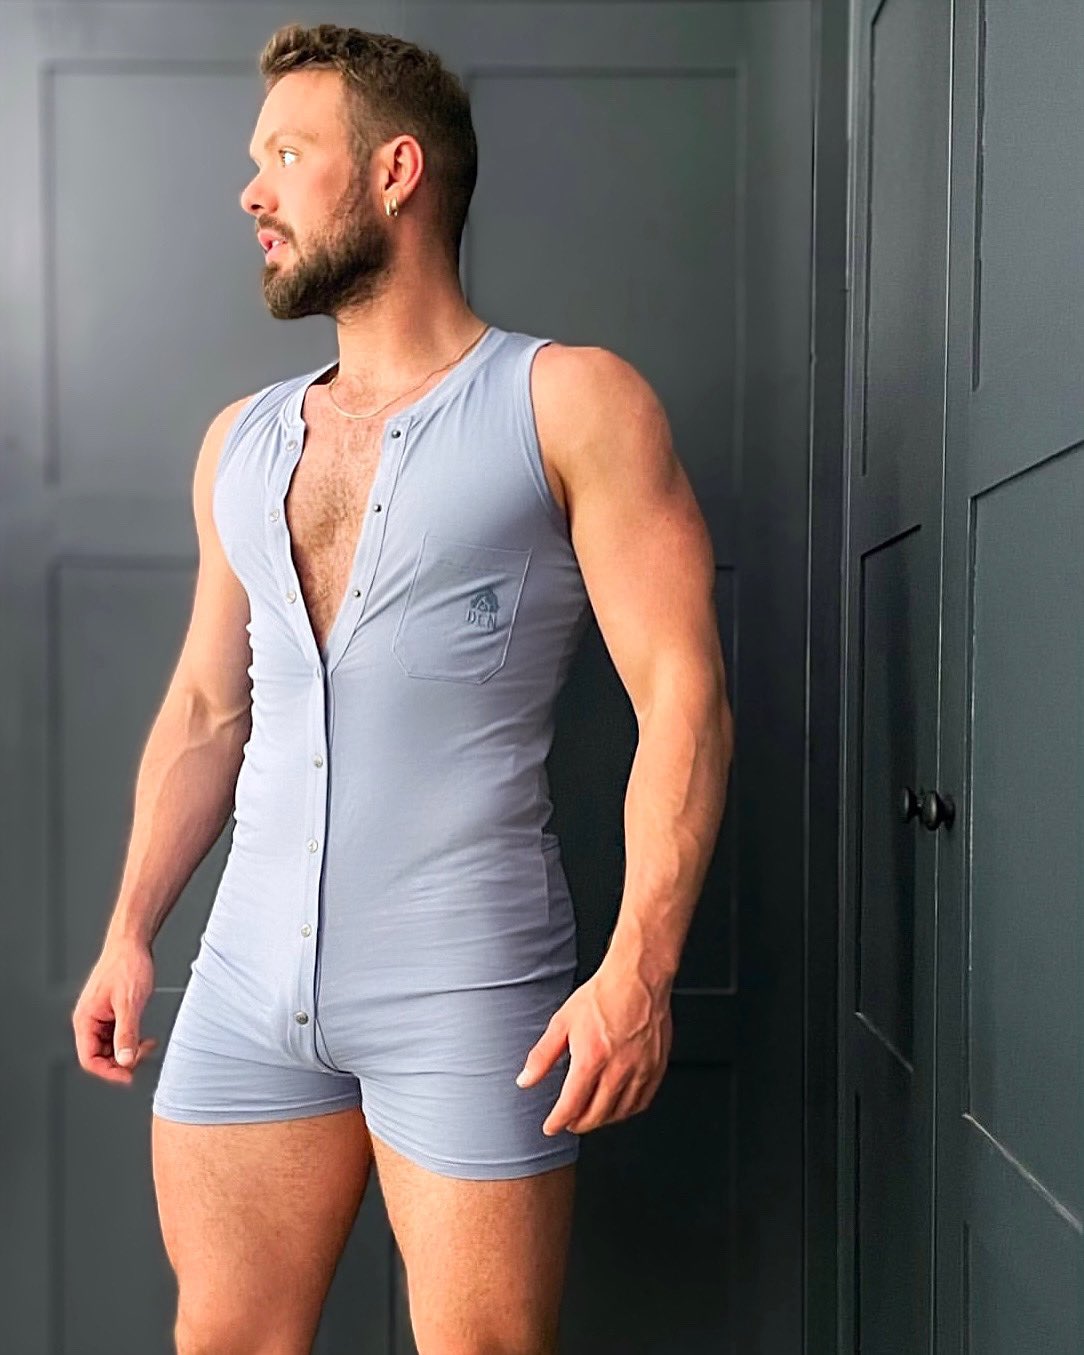 gay male porn star wearing a light blue short union suit for den loungewear